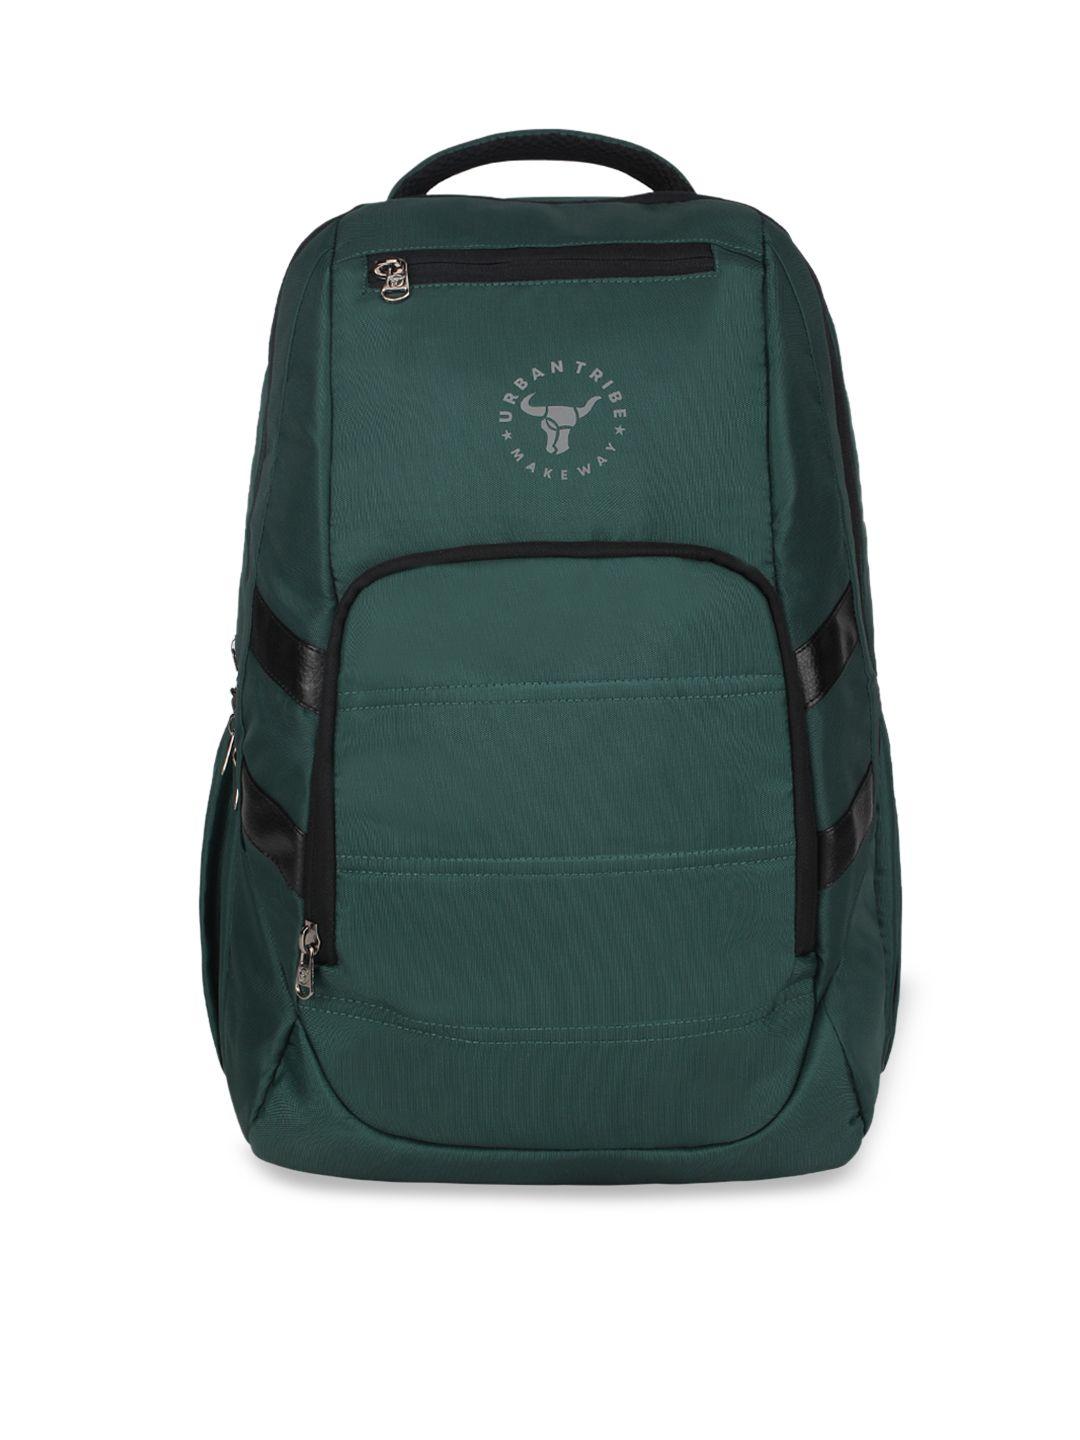 urban tribe unisex green & black backpack